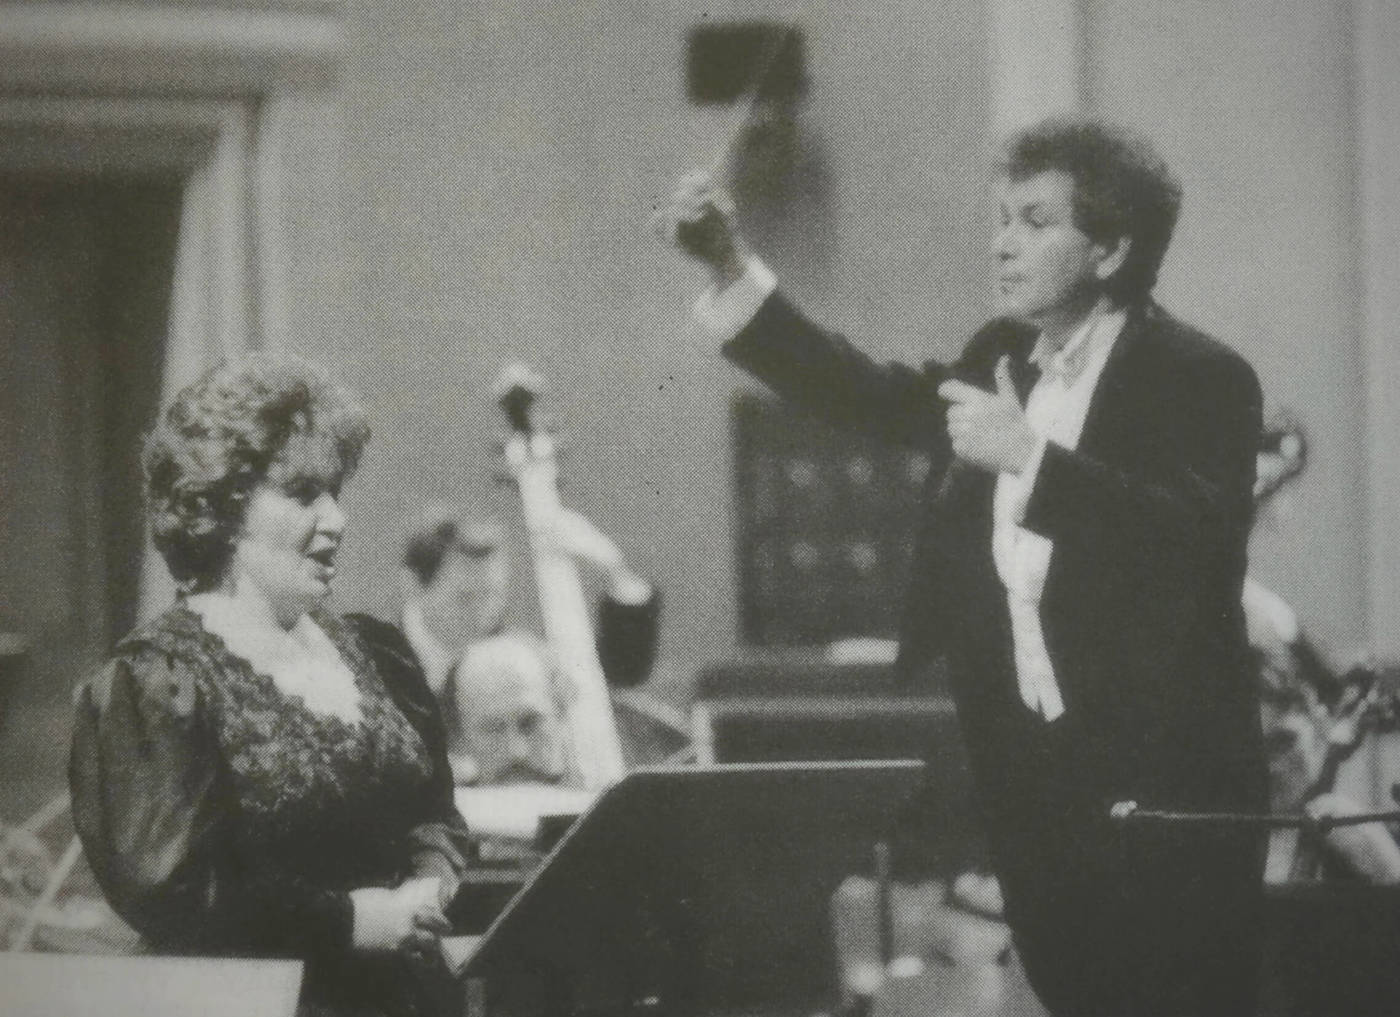 Eva Urbanová and Jiří Bělohlávek in a concert celebrating the sixtieth anniversary of the FOK